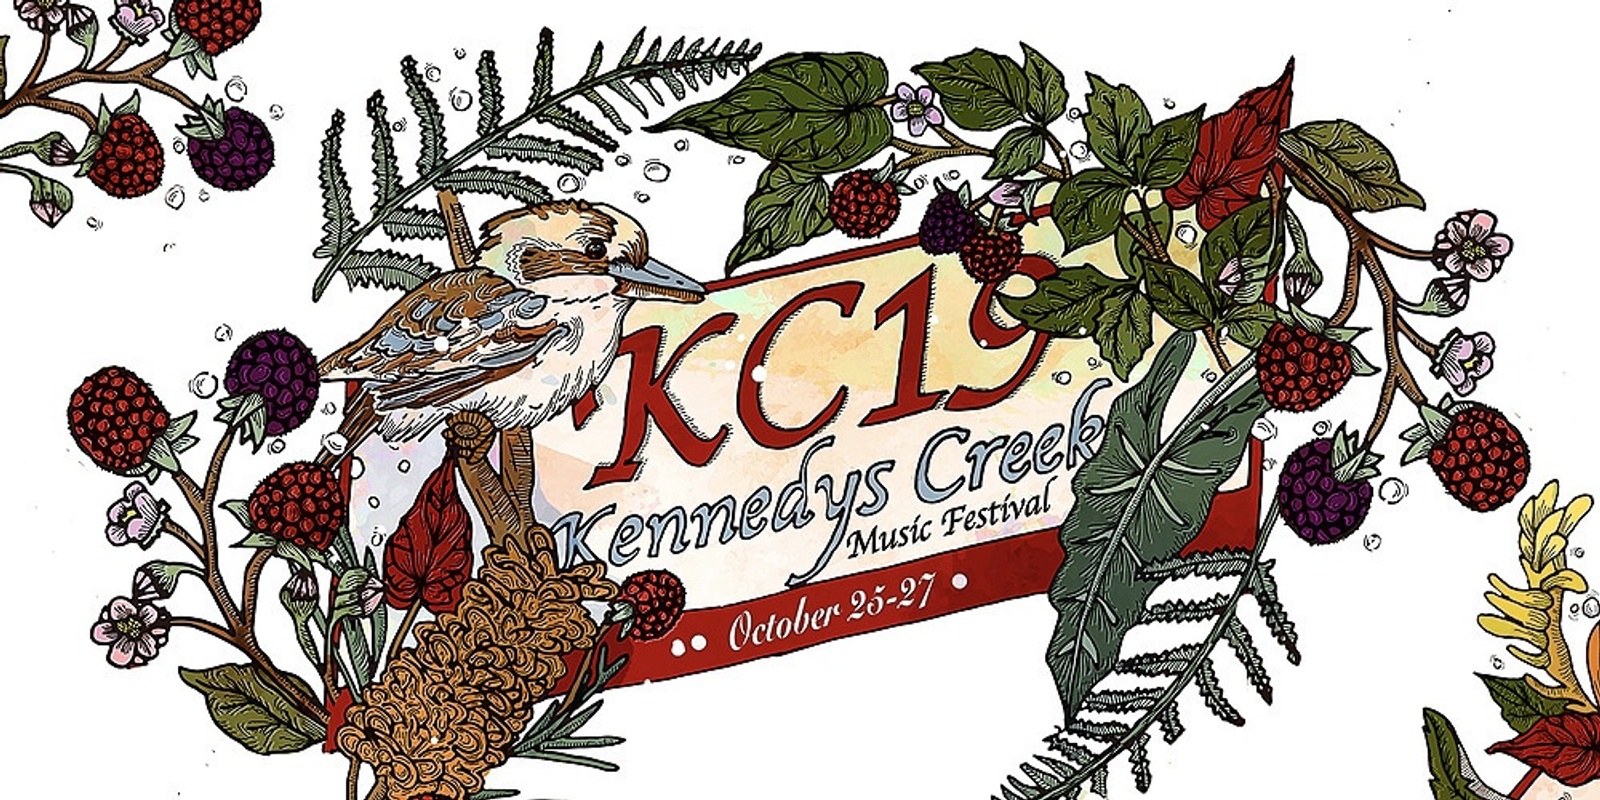 Banner image for Kennedys Creek Music Festival 2019